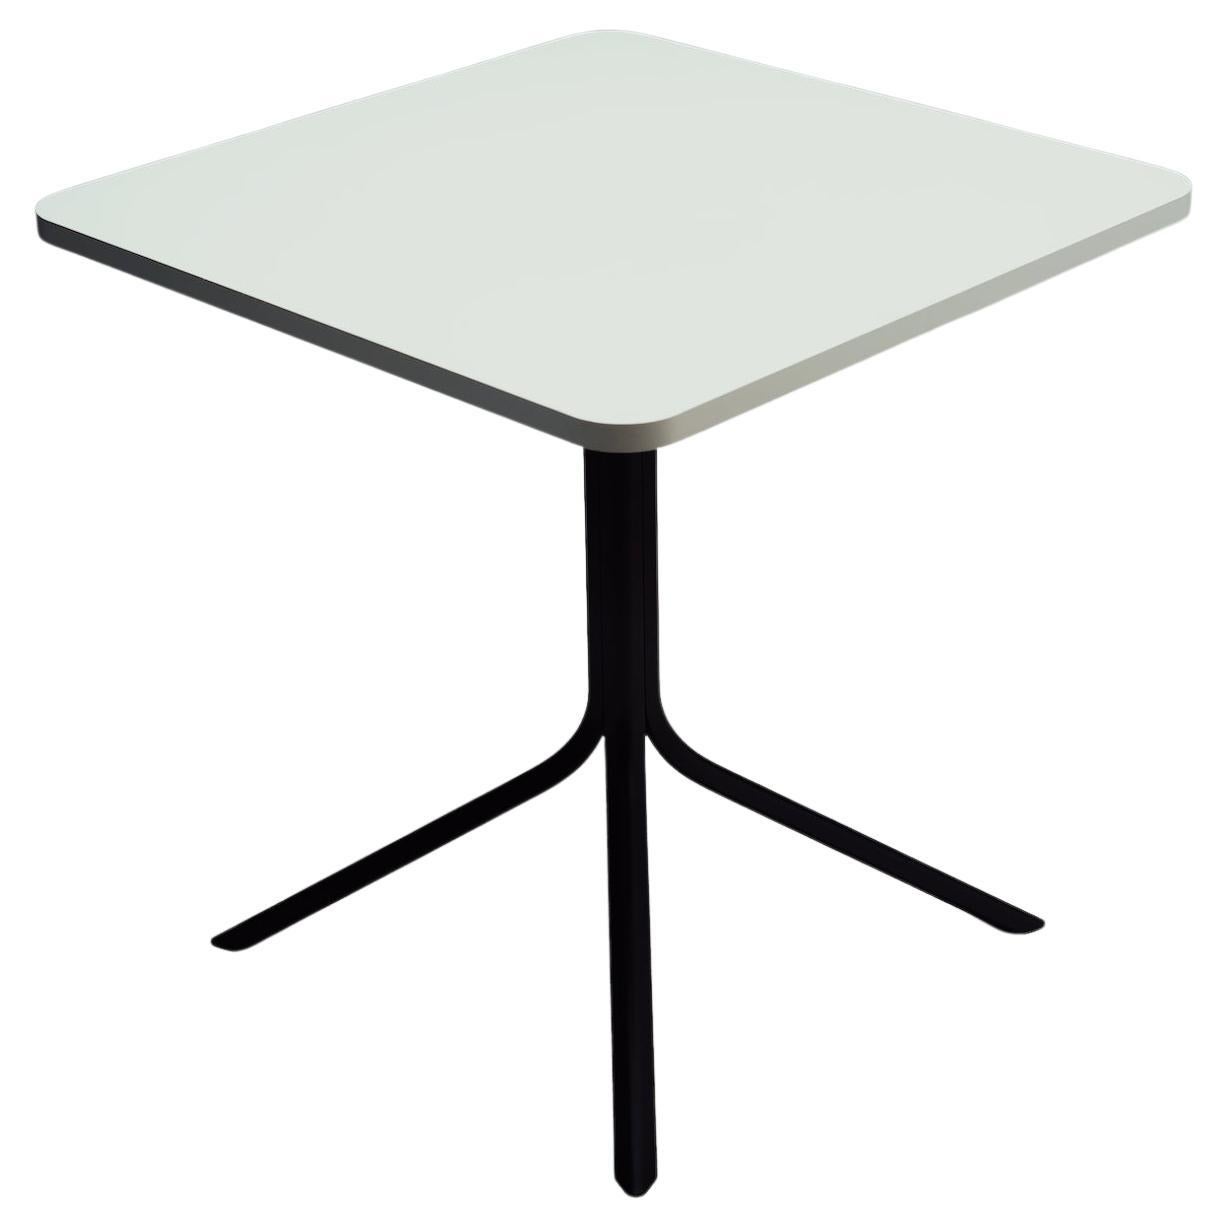 La Manufacture-Paris High Tri Folding Table Designed by Michael Young